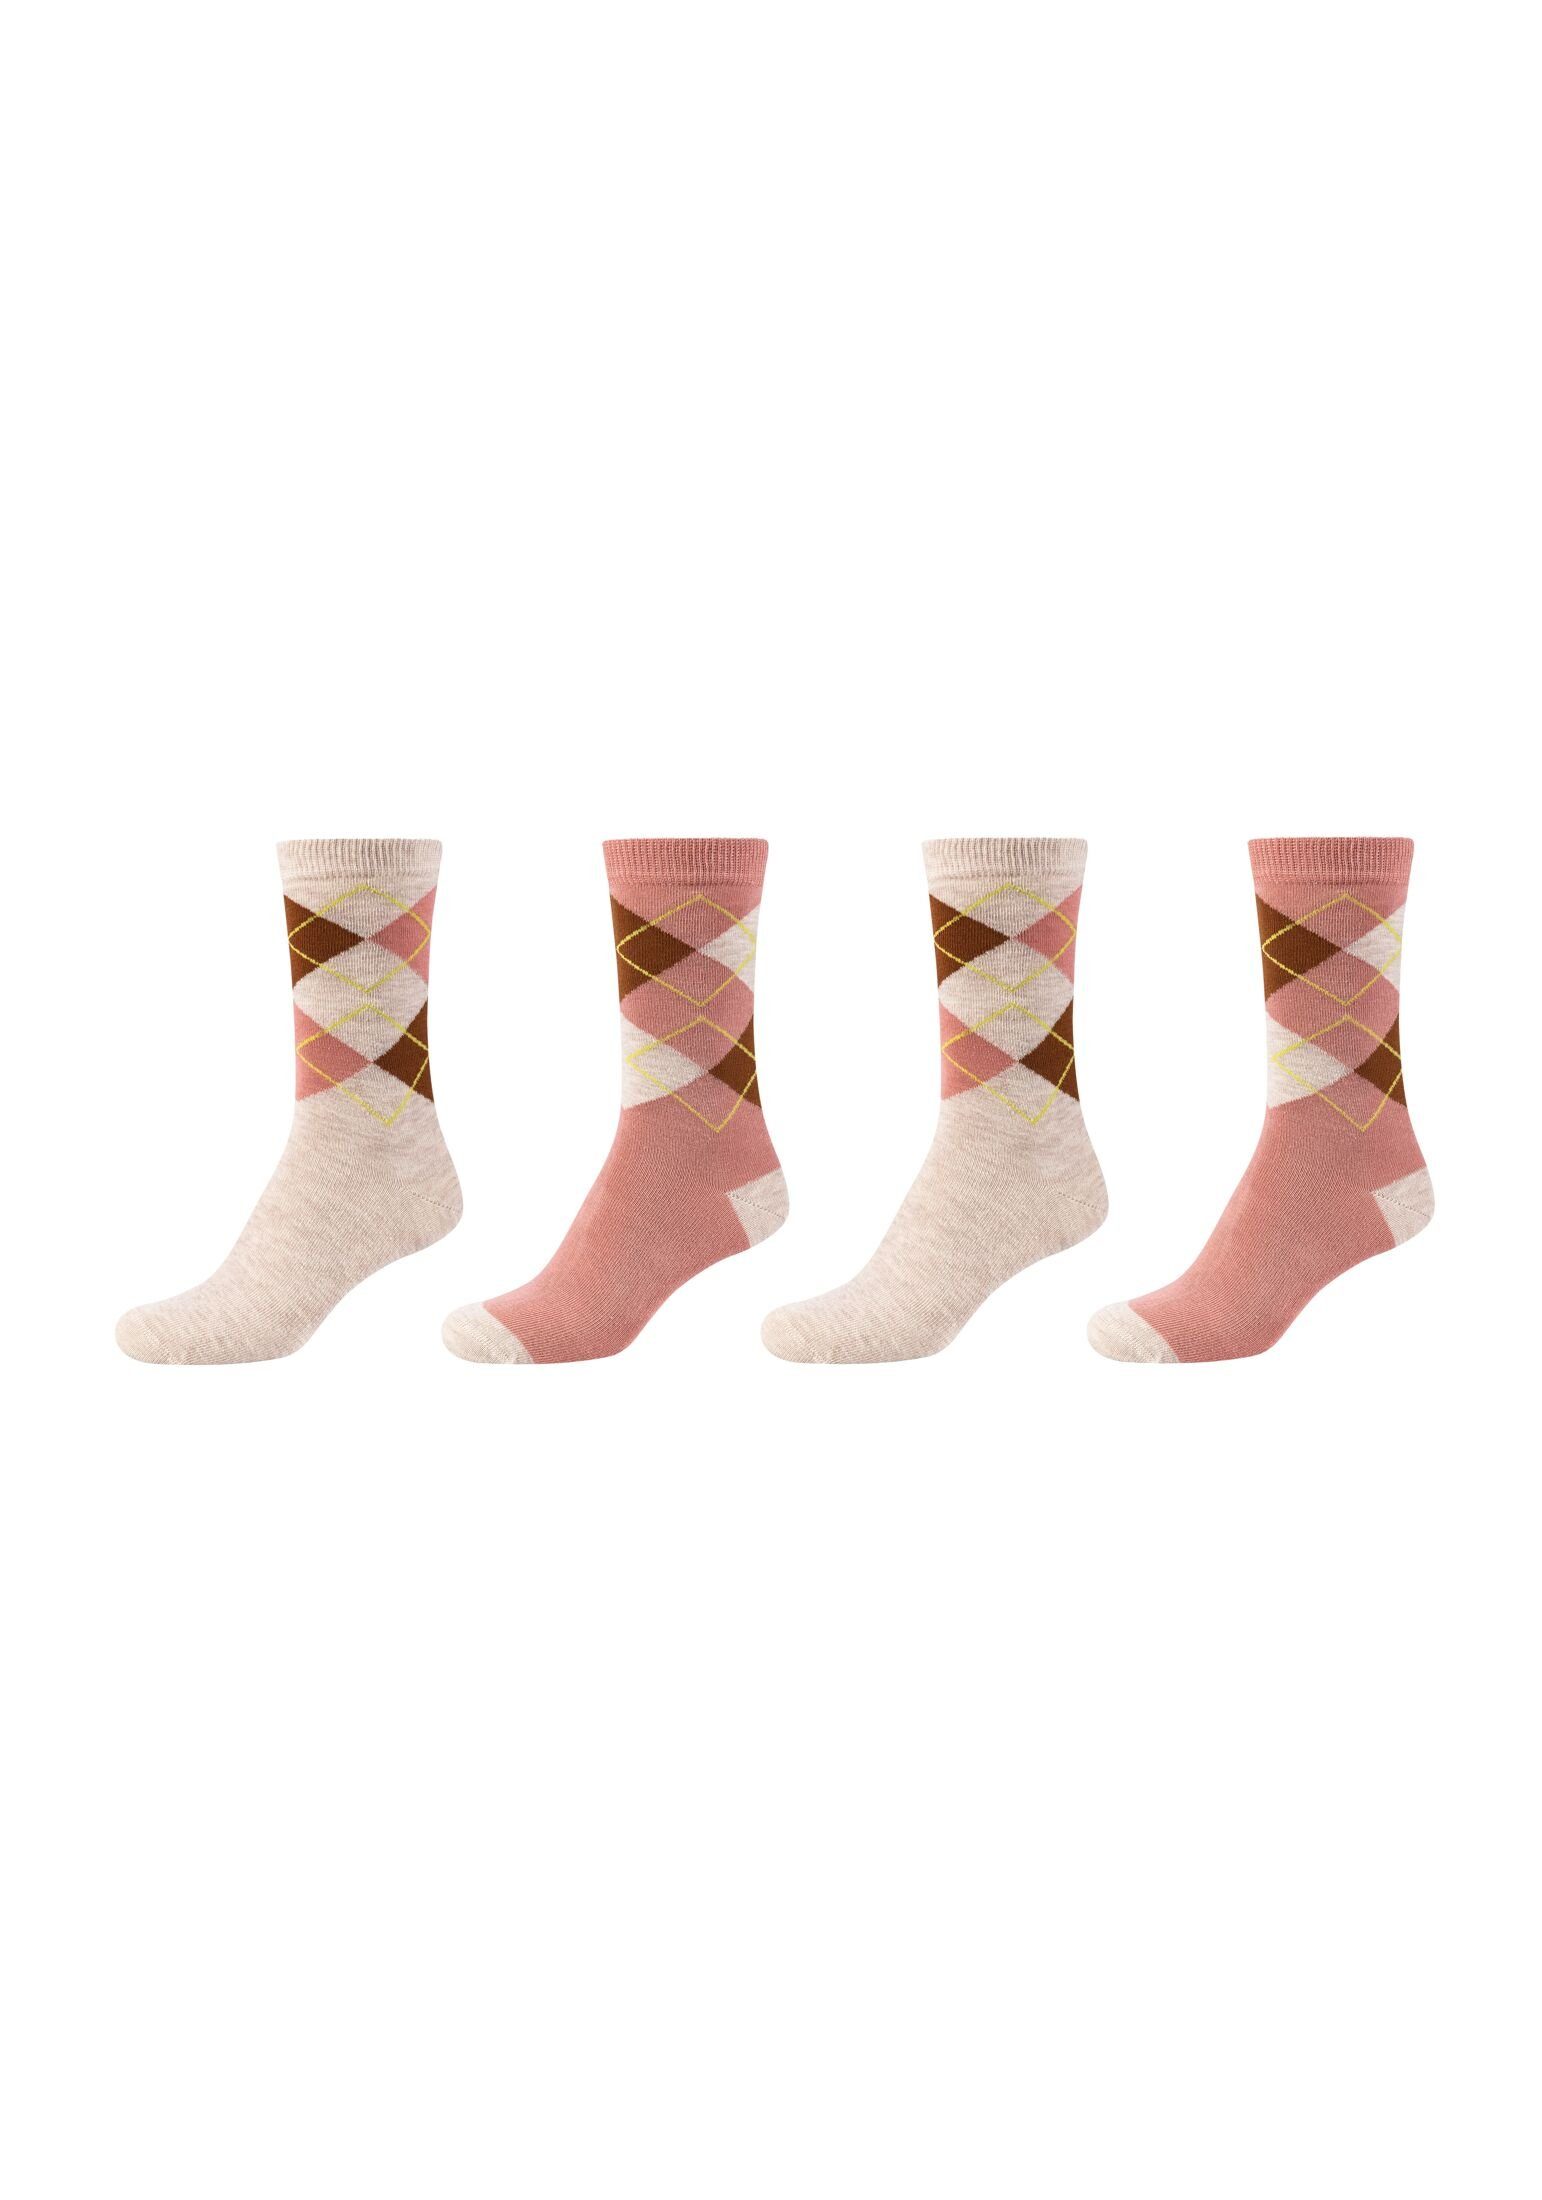 s.Oliver Pack 4er canyon rose Socken Socken